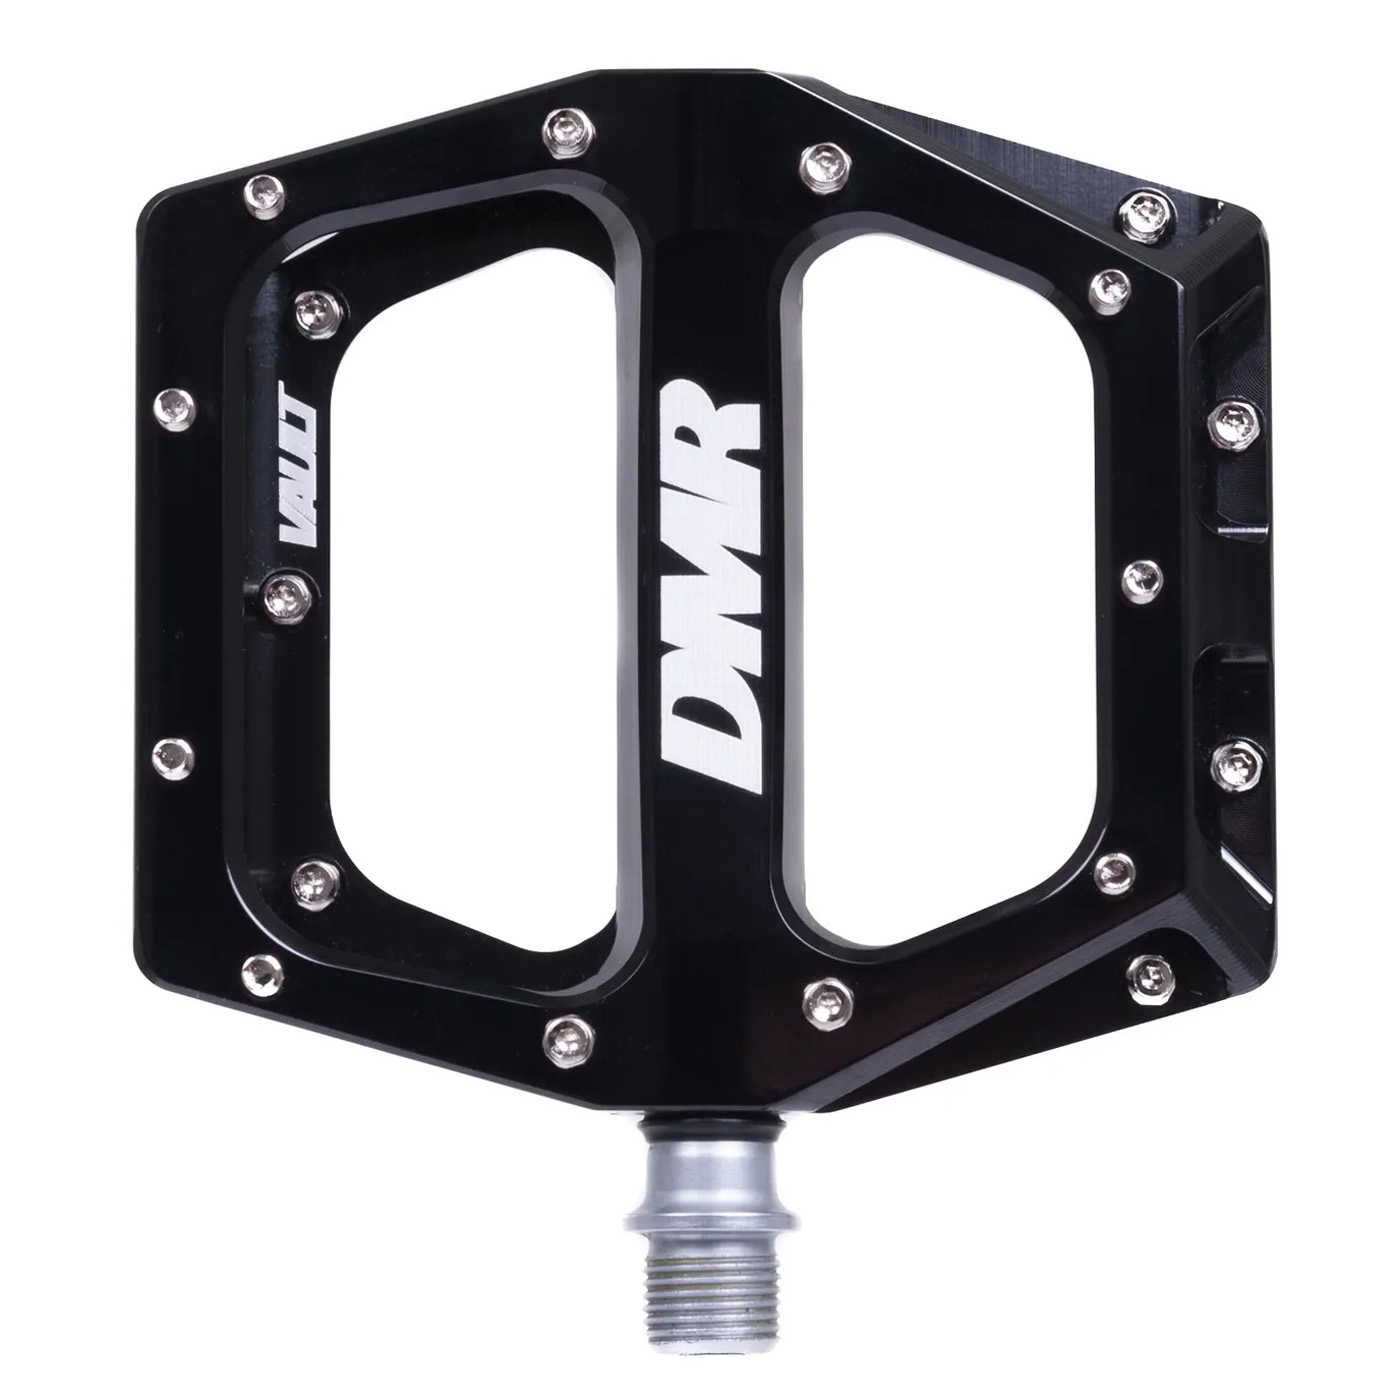 Productfoto van DMR Vault Pedal - black gloss